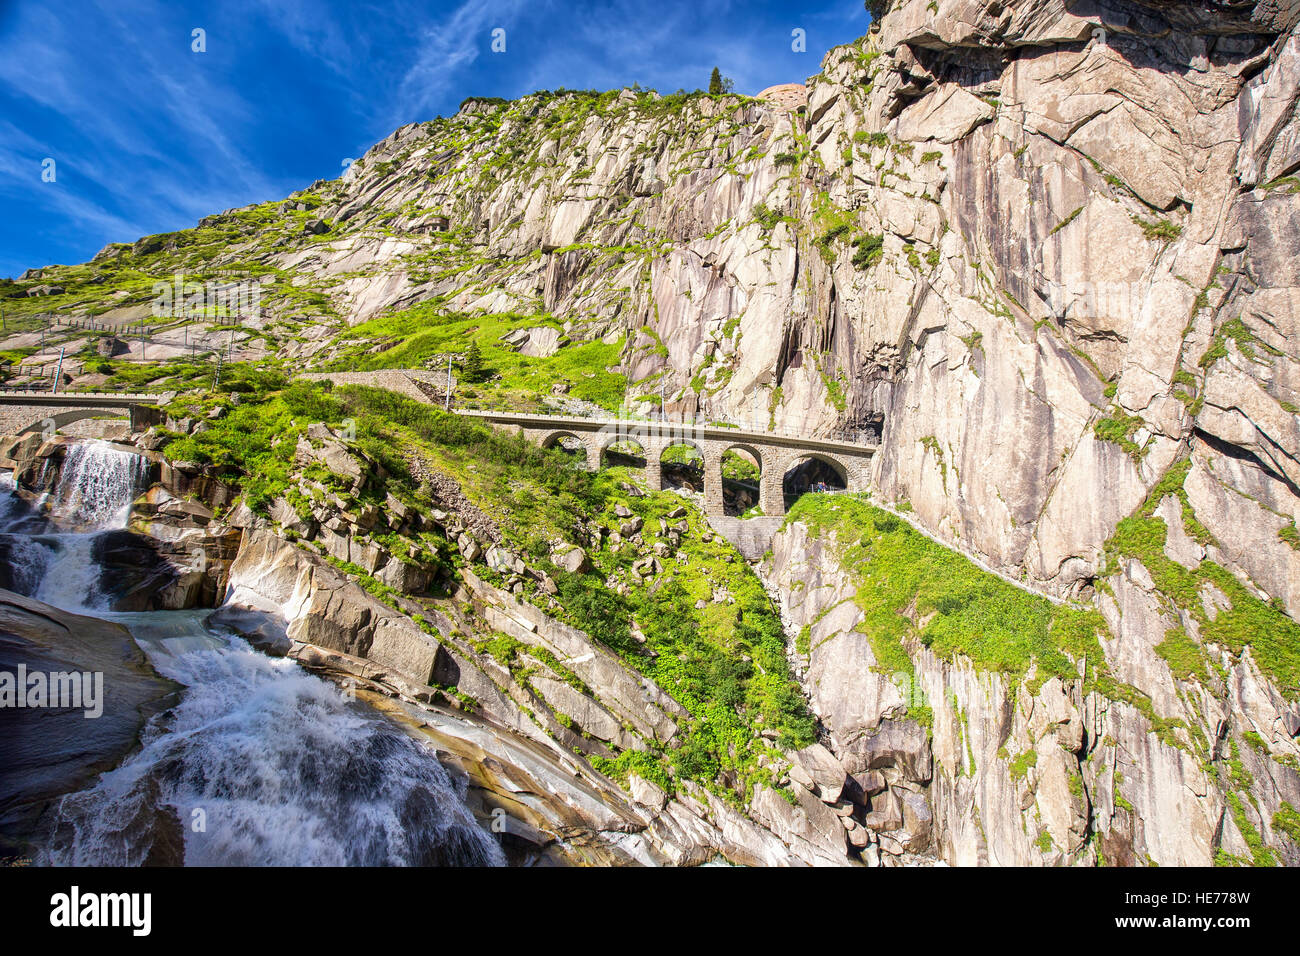 The railroad bridge Teufelsbrucke - Devil's bridge near Andermatt on Gotthard mountain pass road in Swiss Alps Stock Photo